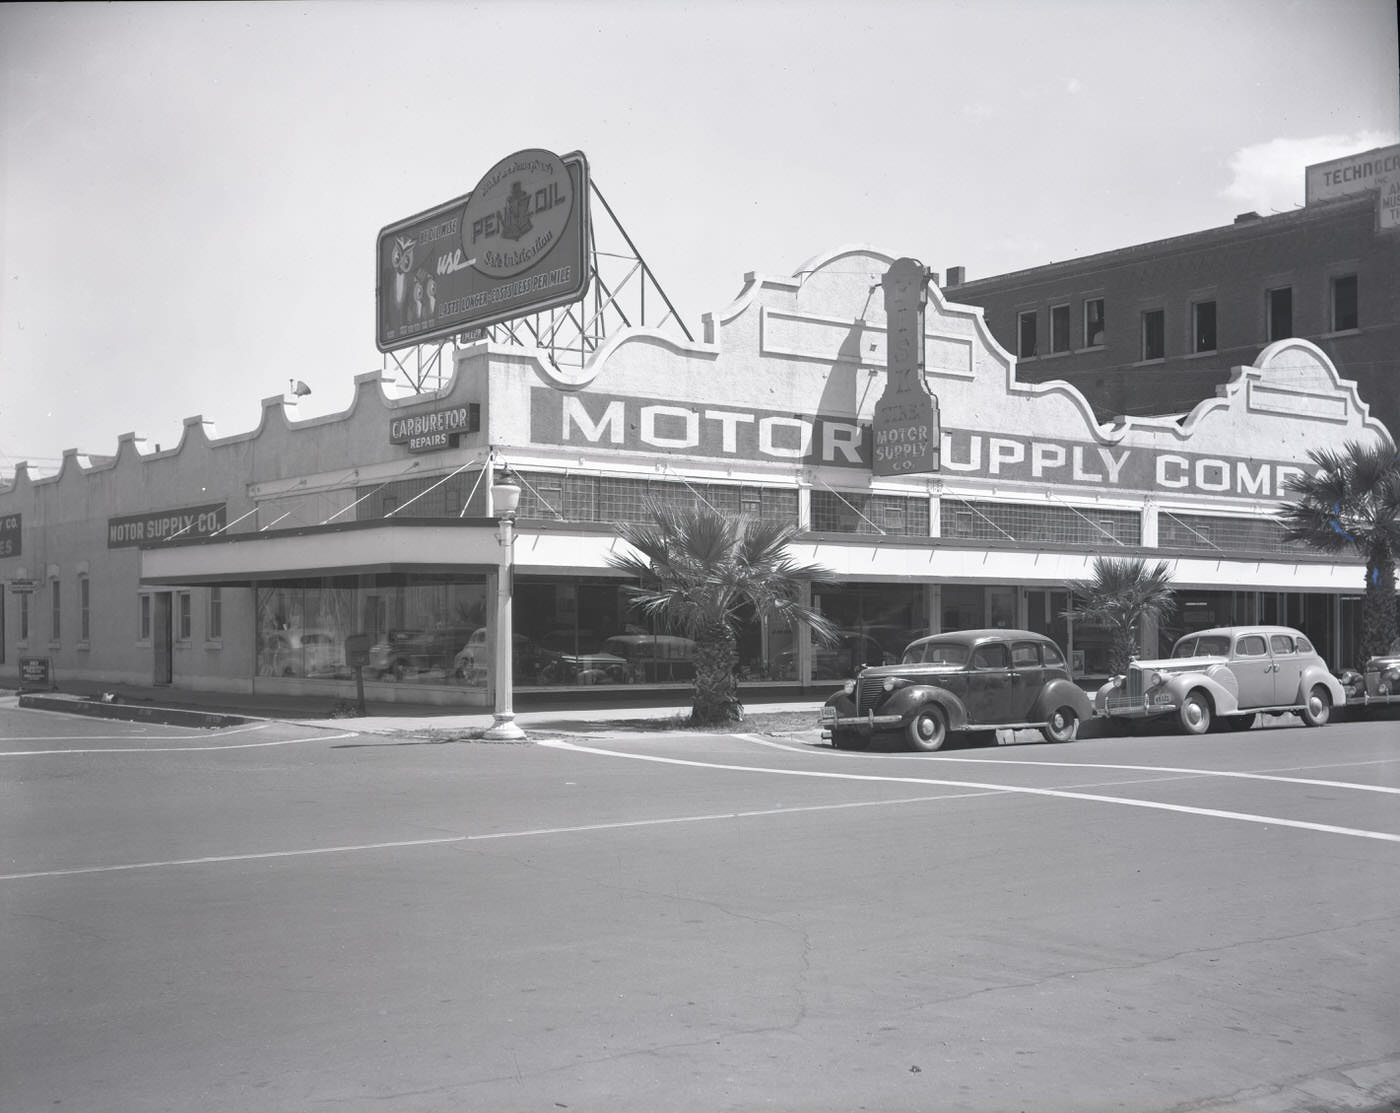 Motor Supply Co. Building Exterior, 1946